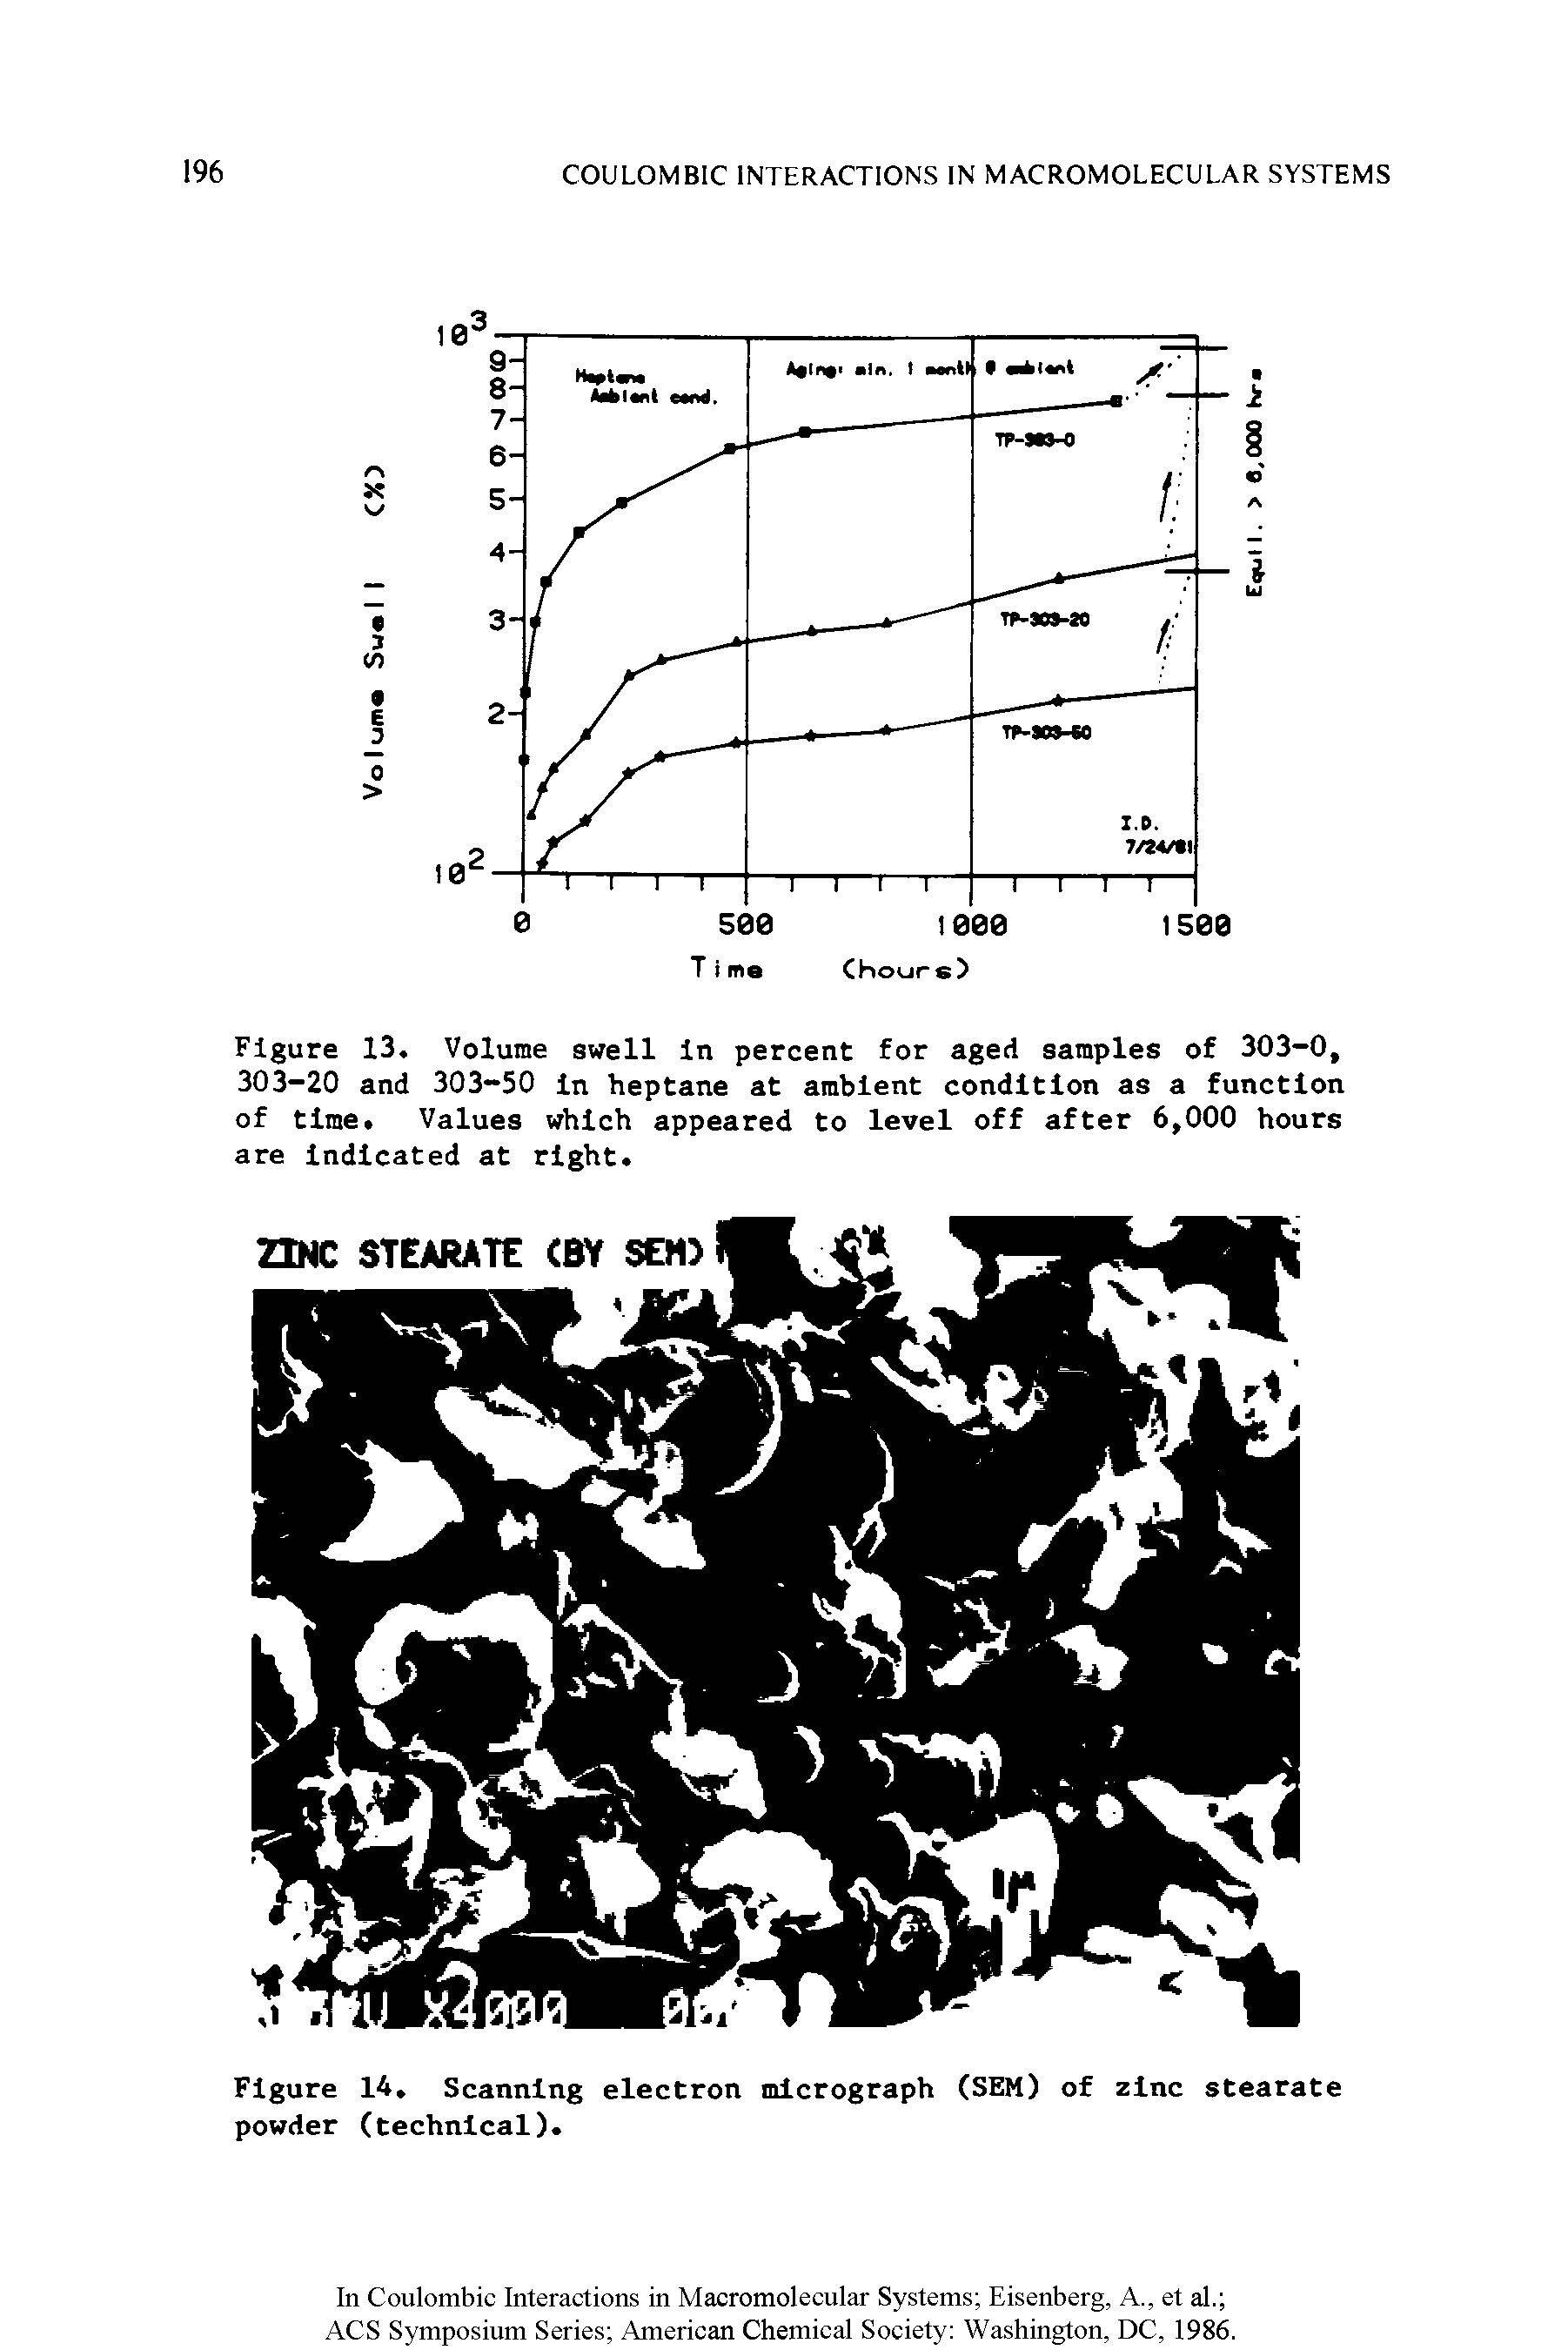 Figure 14. Scanning electron micrograph (SEM) of zinc stearate powder (technical).